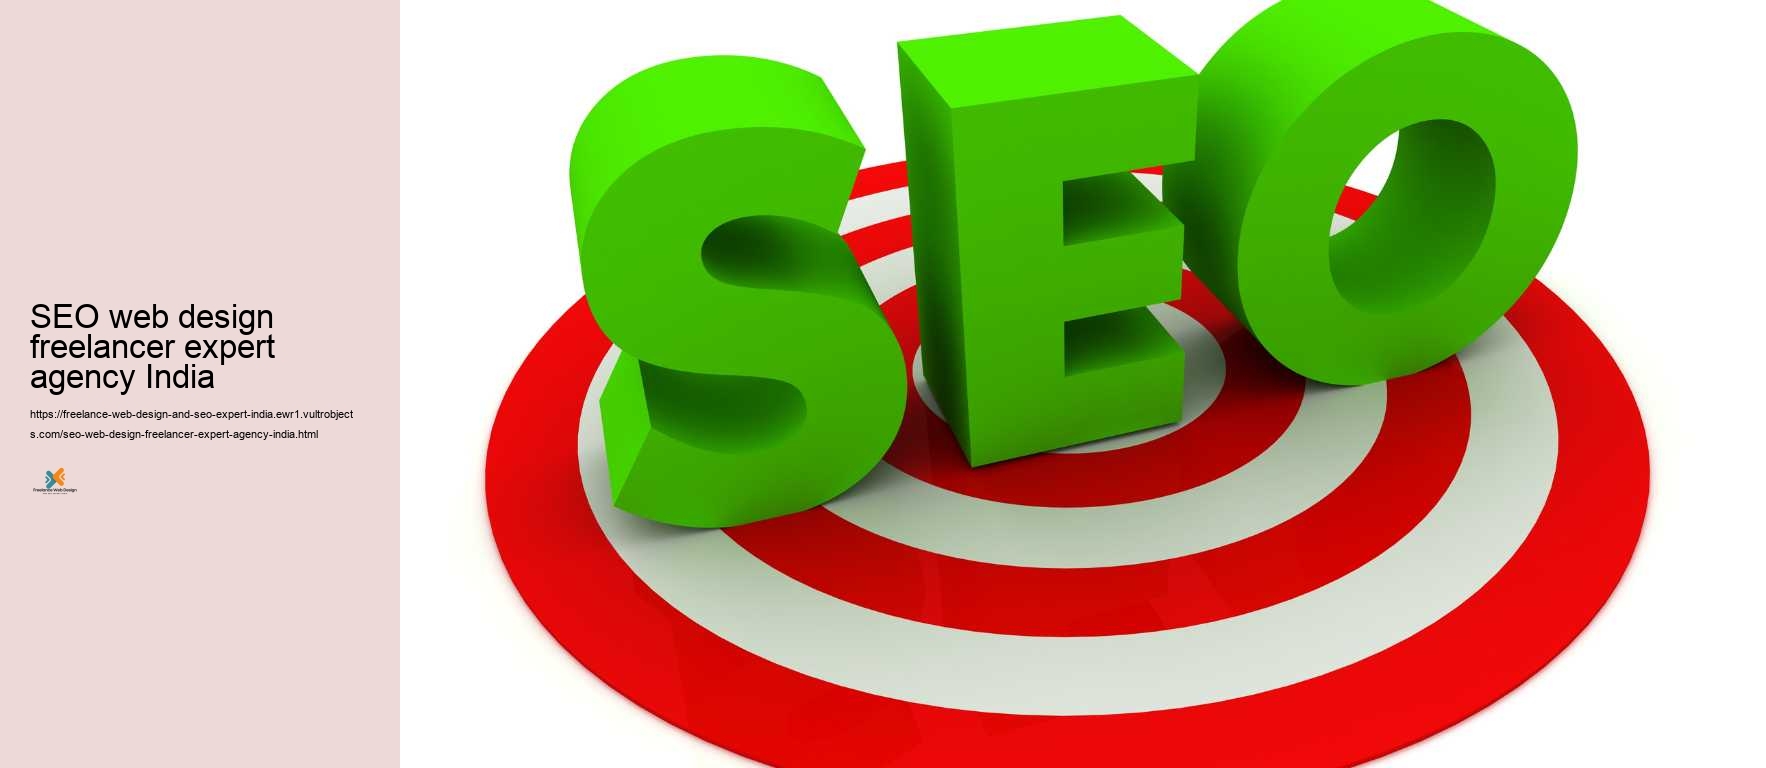 SEO web design freelancer expert agency India